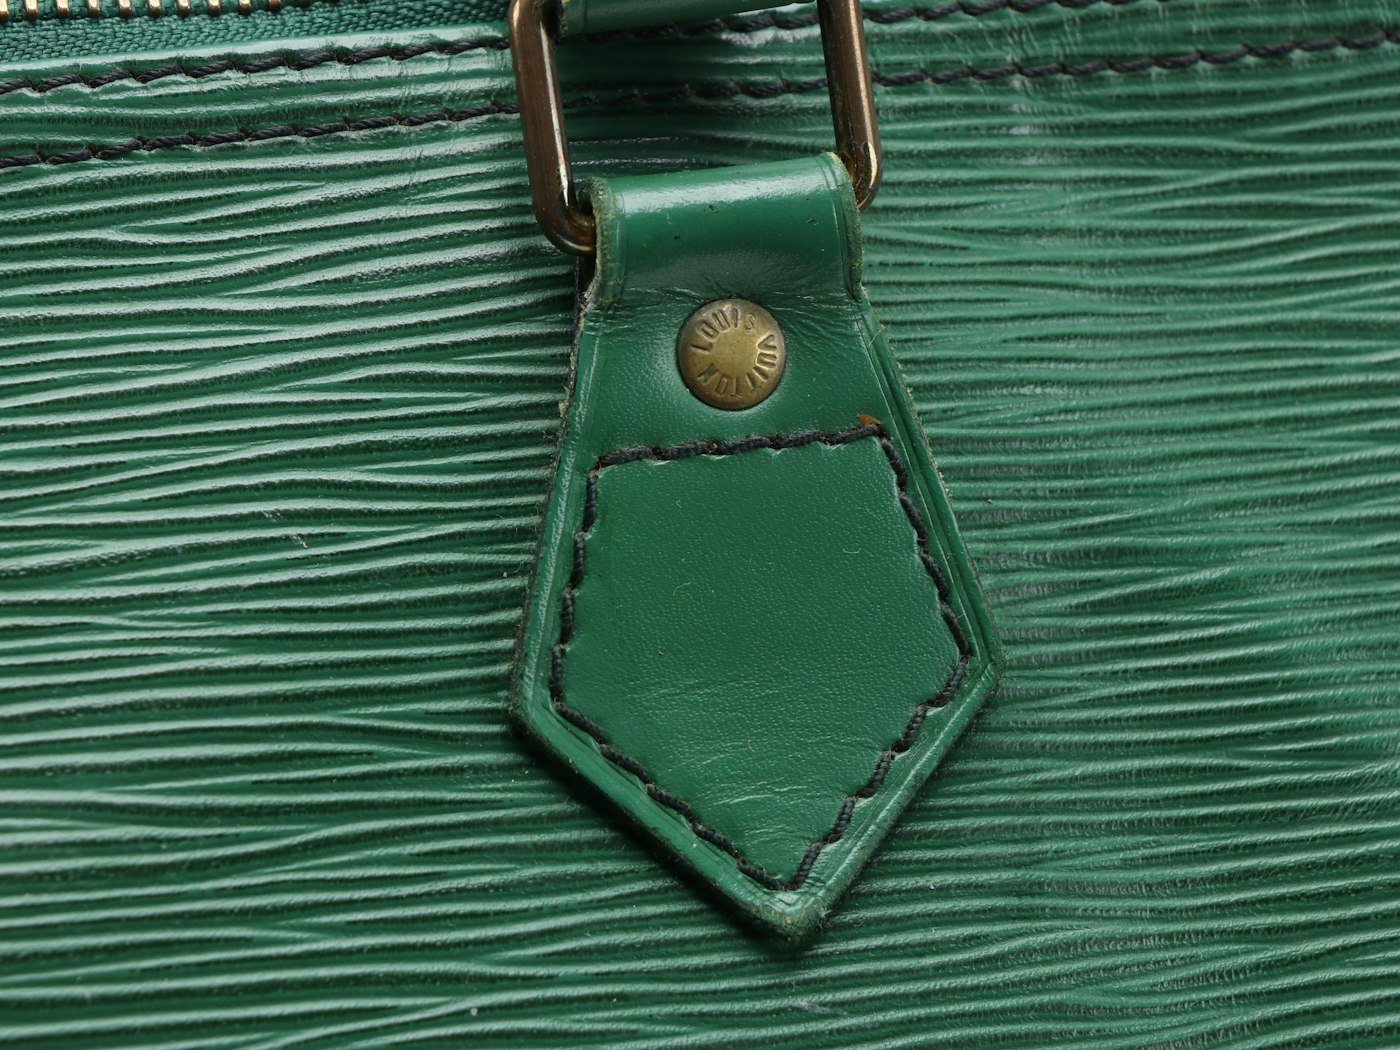 Louis Vuitton Speedy 35 Handbag in Borneo Green Epi and Smooth Leather | EBTH